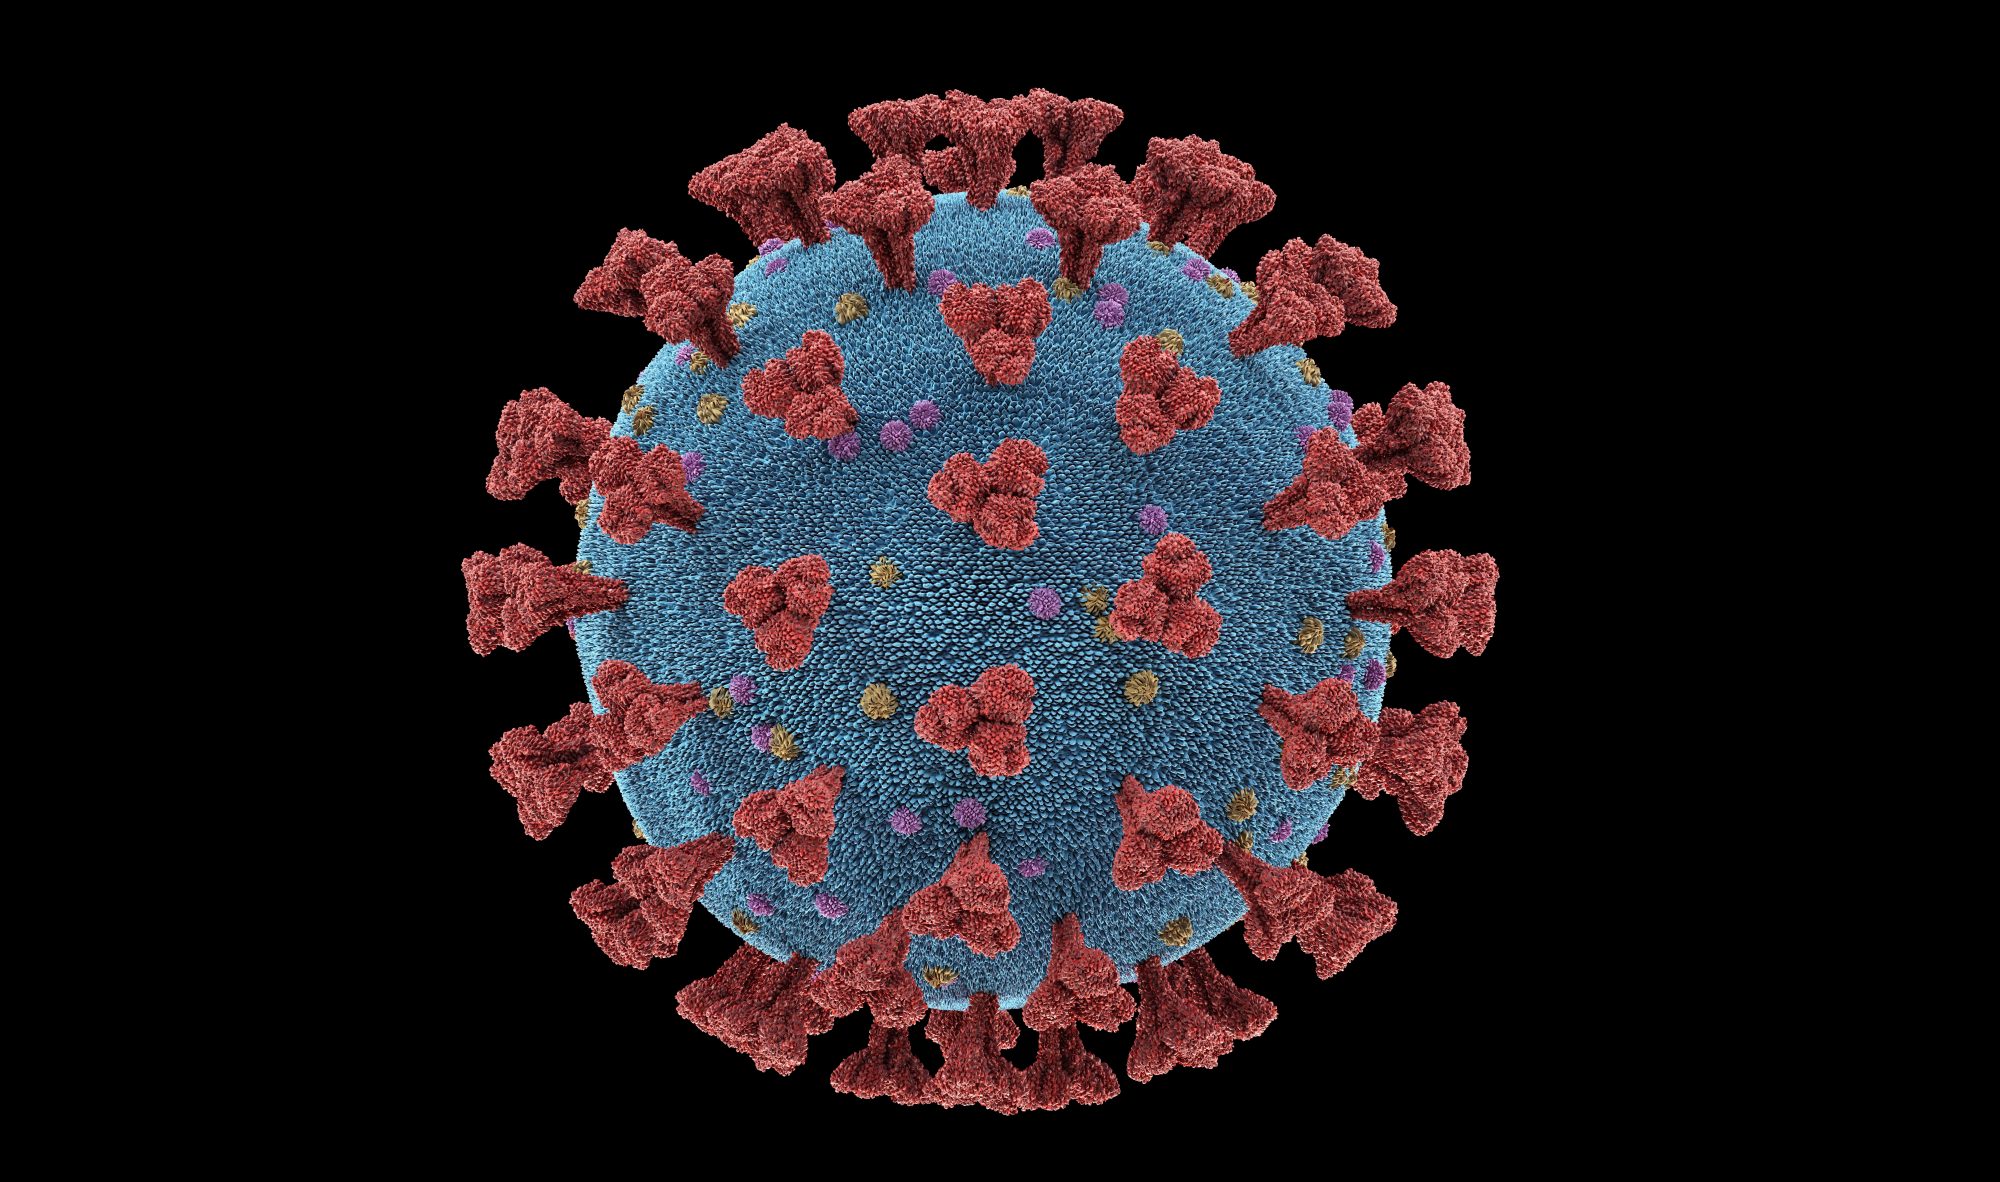 молекула коронавируса фото